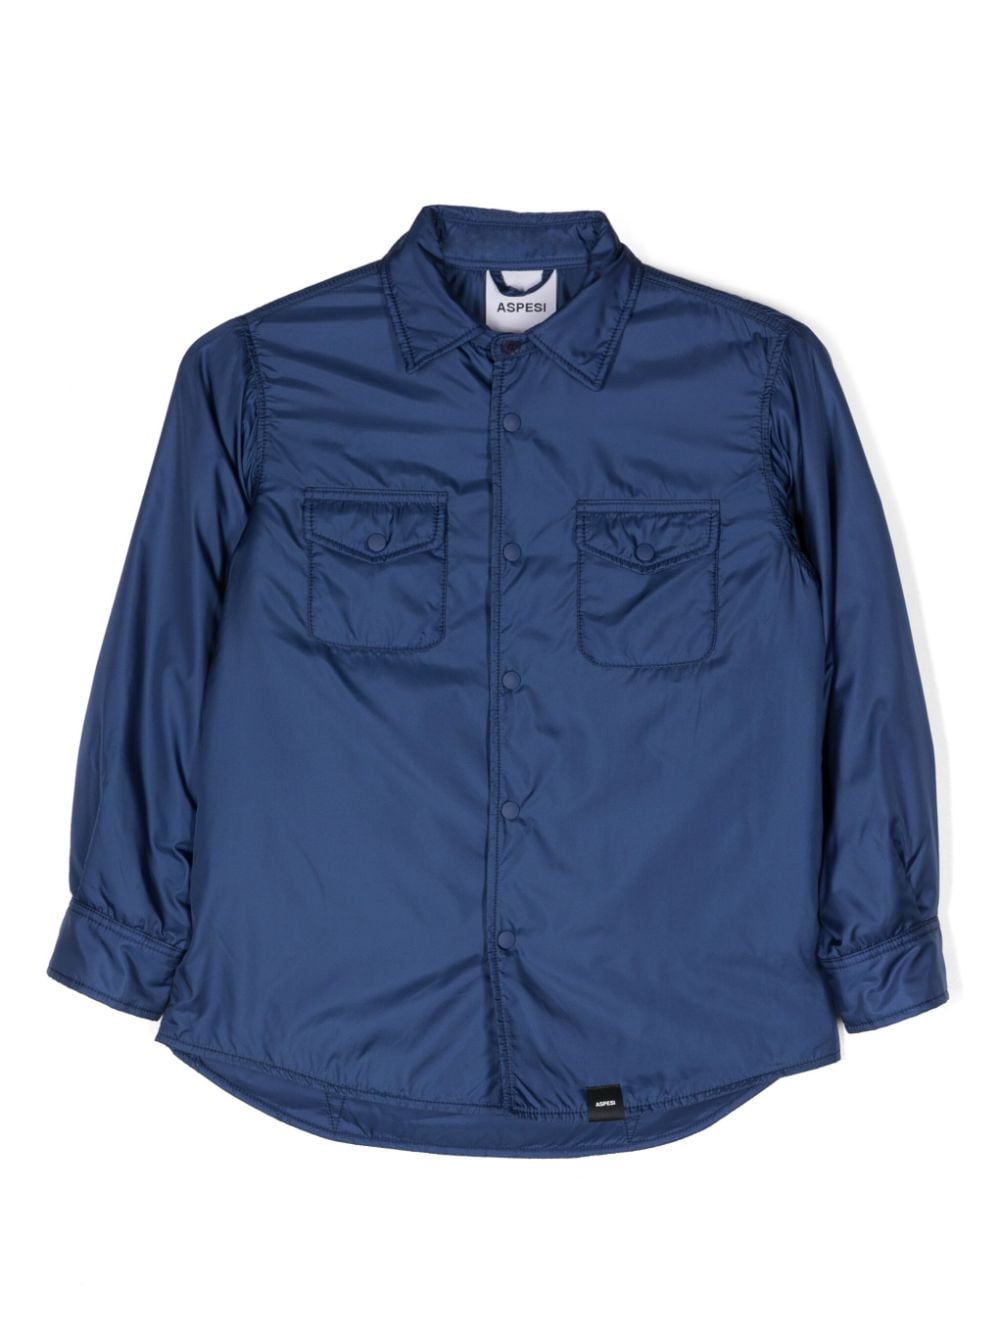 Aspesi Kids logo-patch shirt jacket - Blue von Aspesi Kids